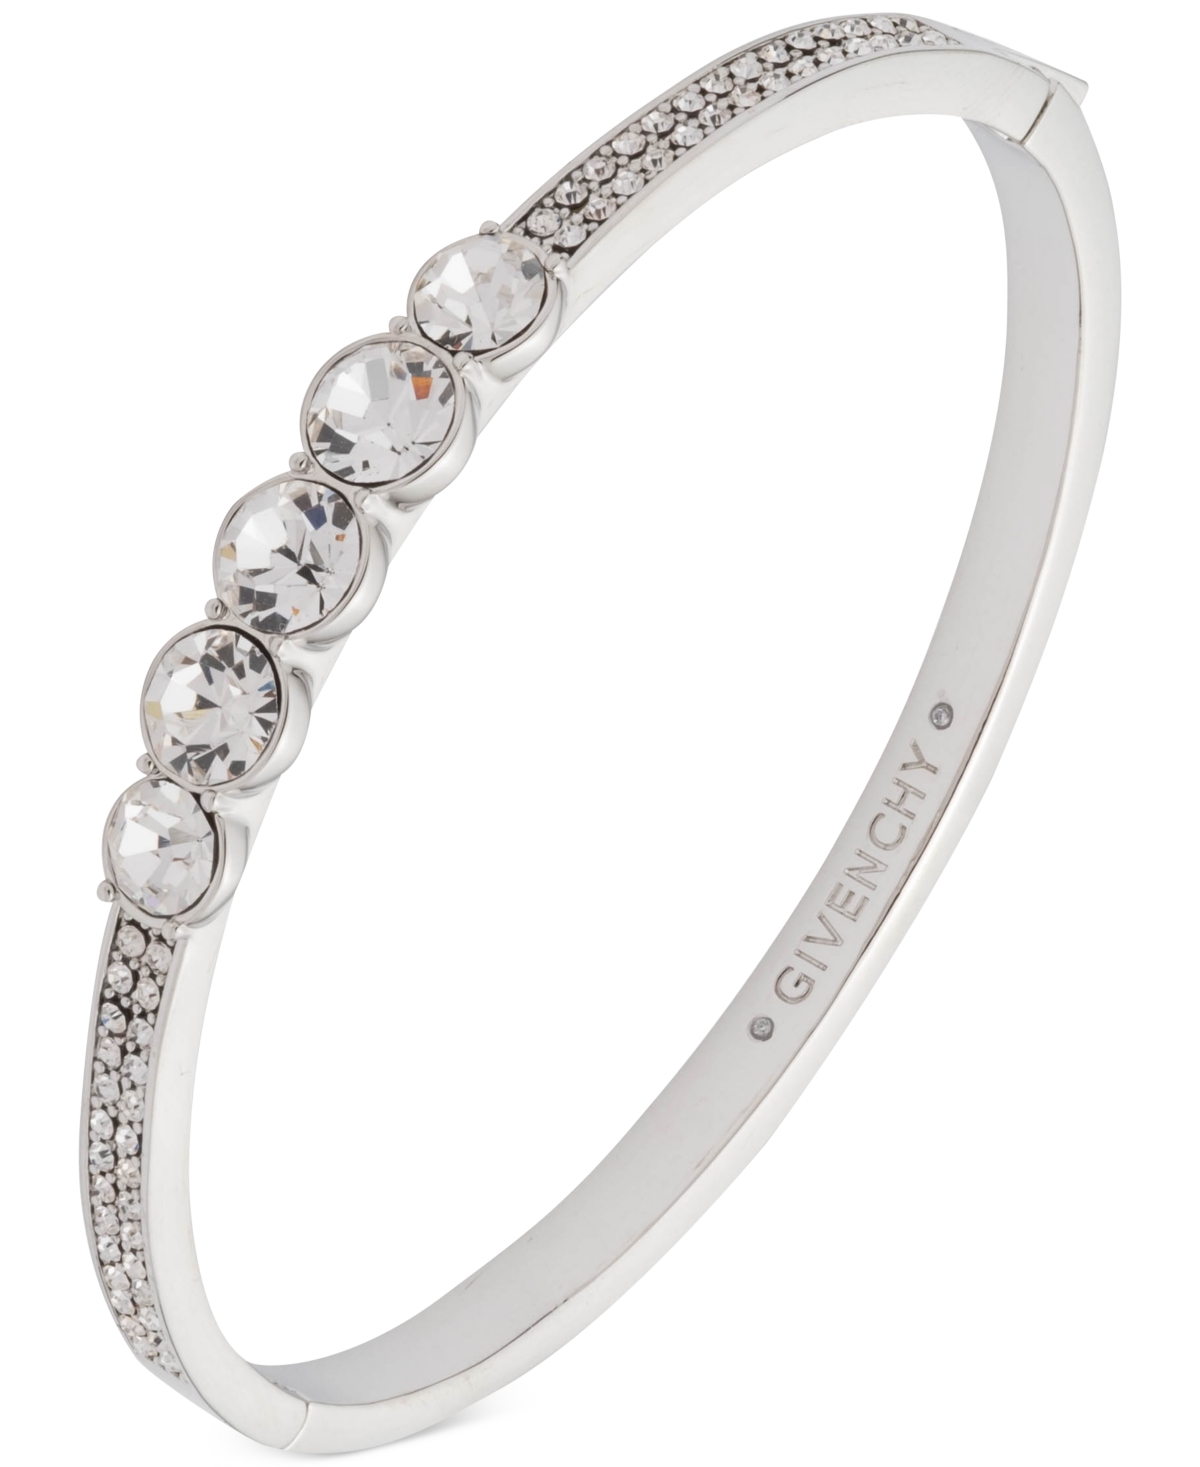 Givenchy Silver-Tone Color Crystal Bangle Bracelet